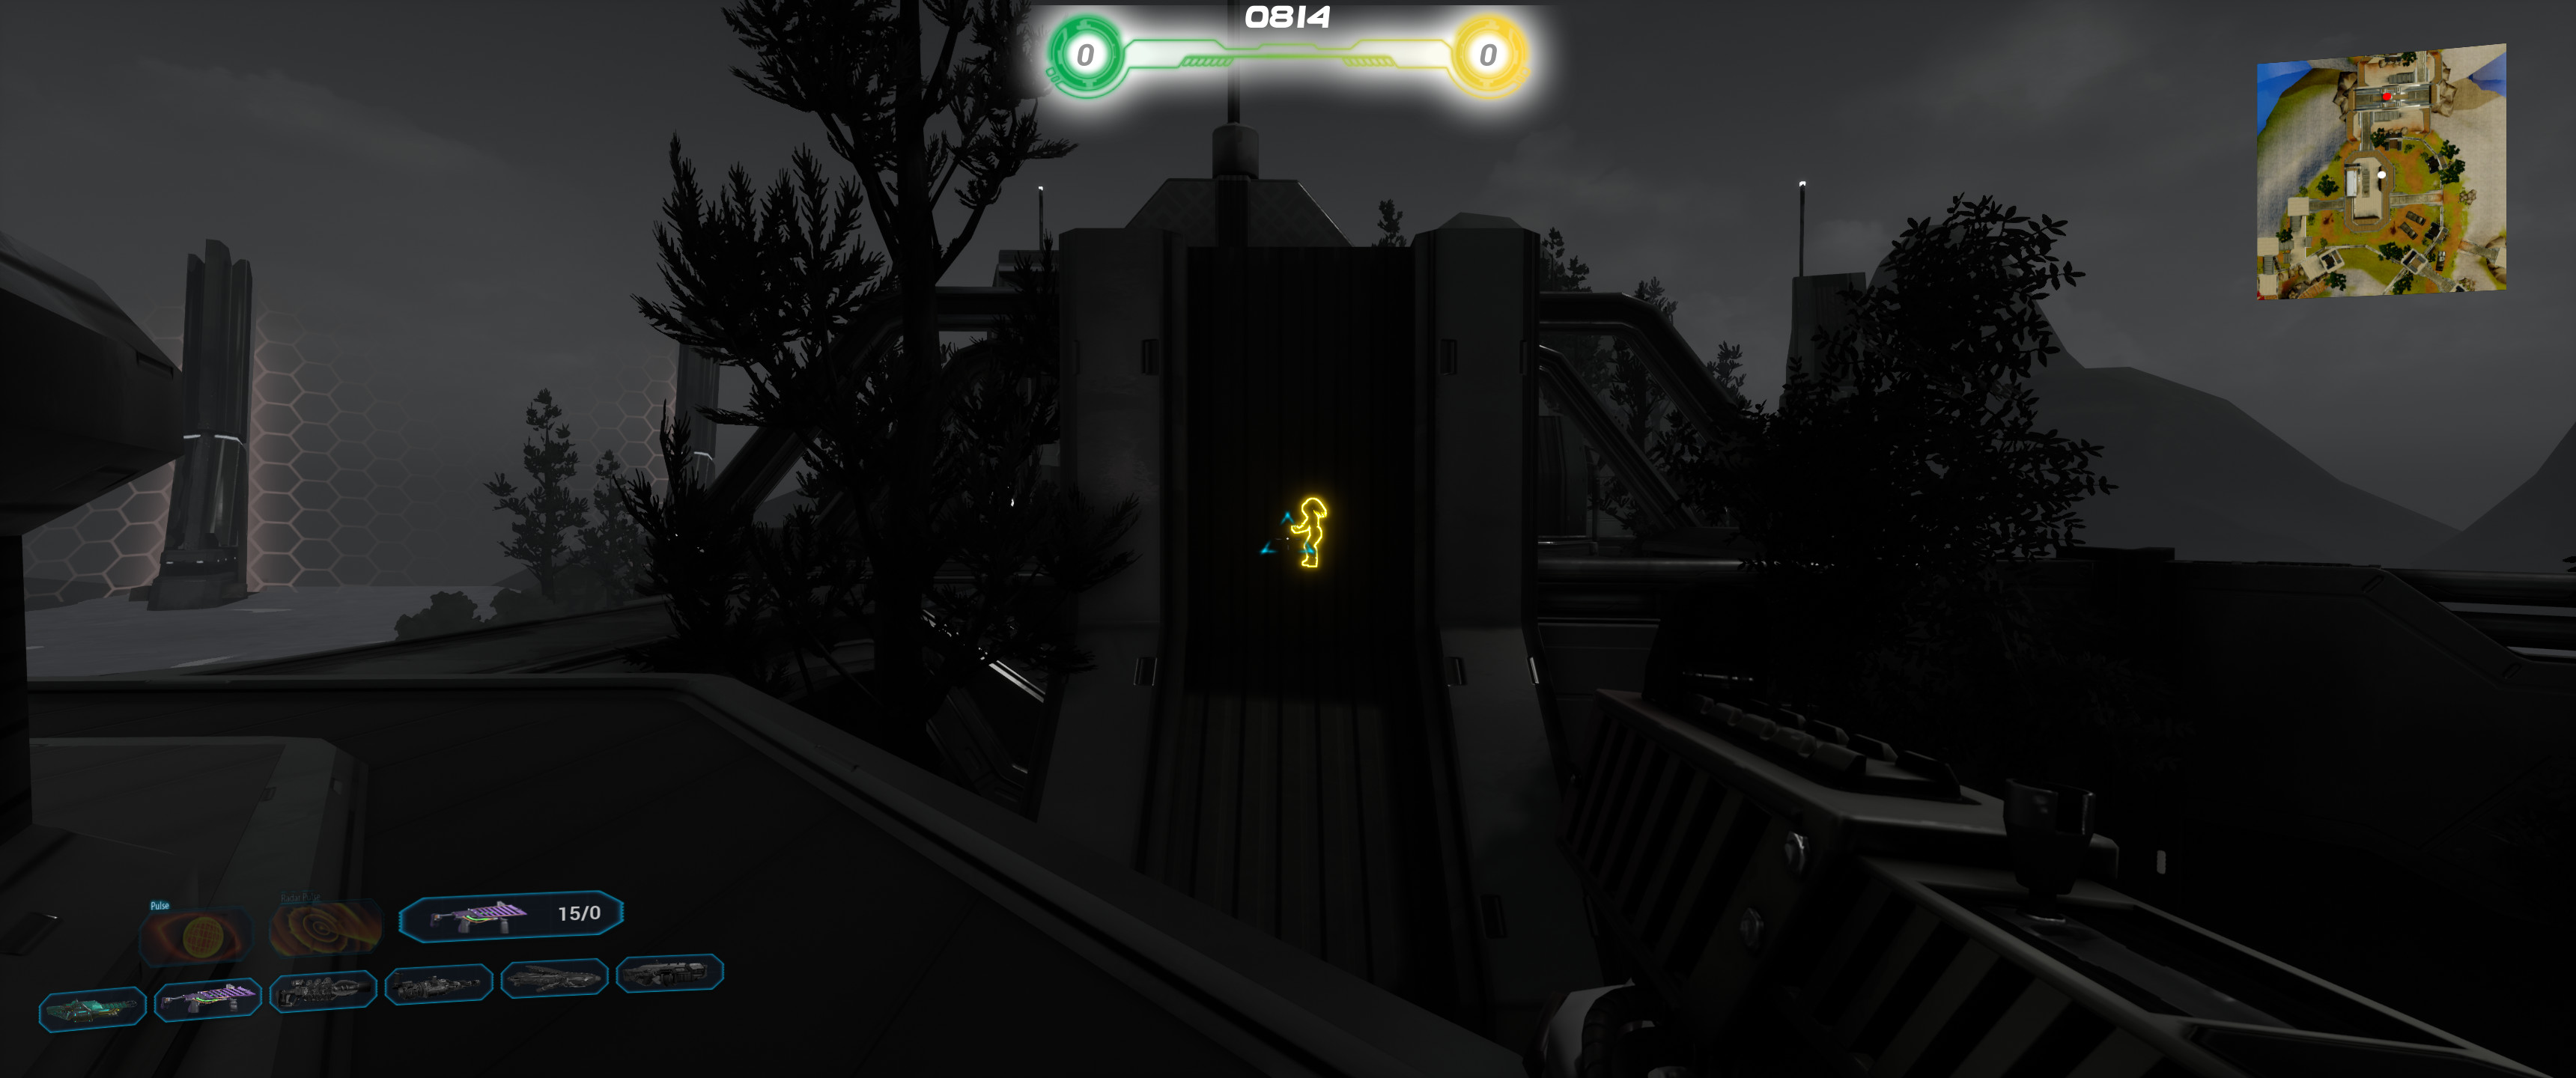 Defense corp - Earth screenshot